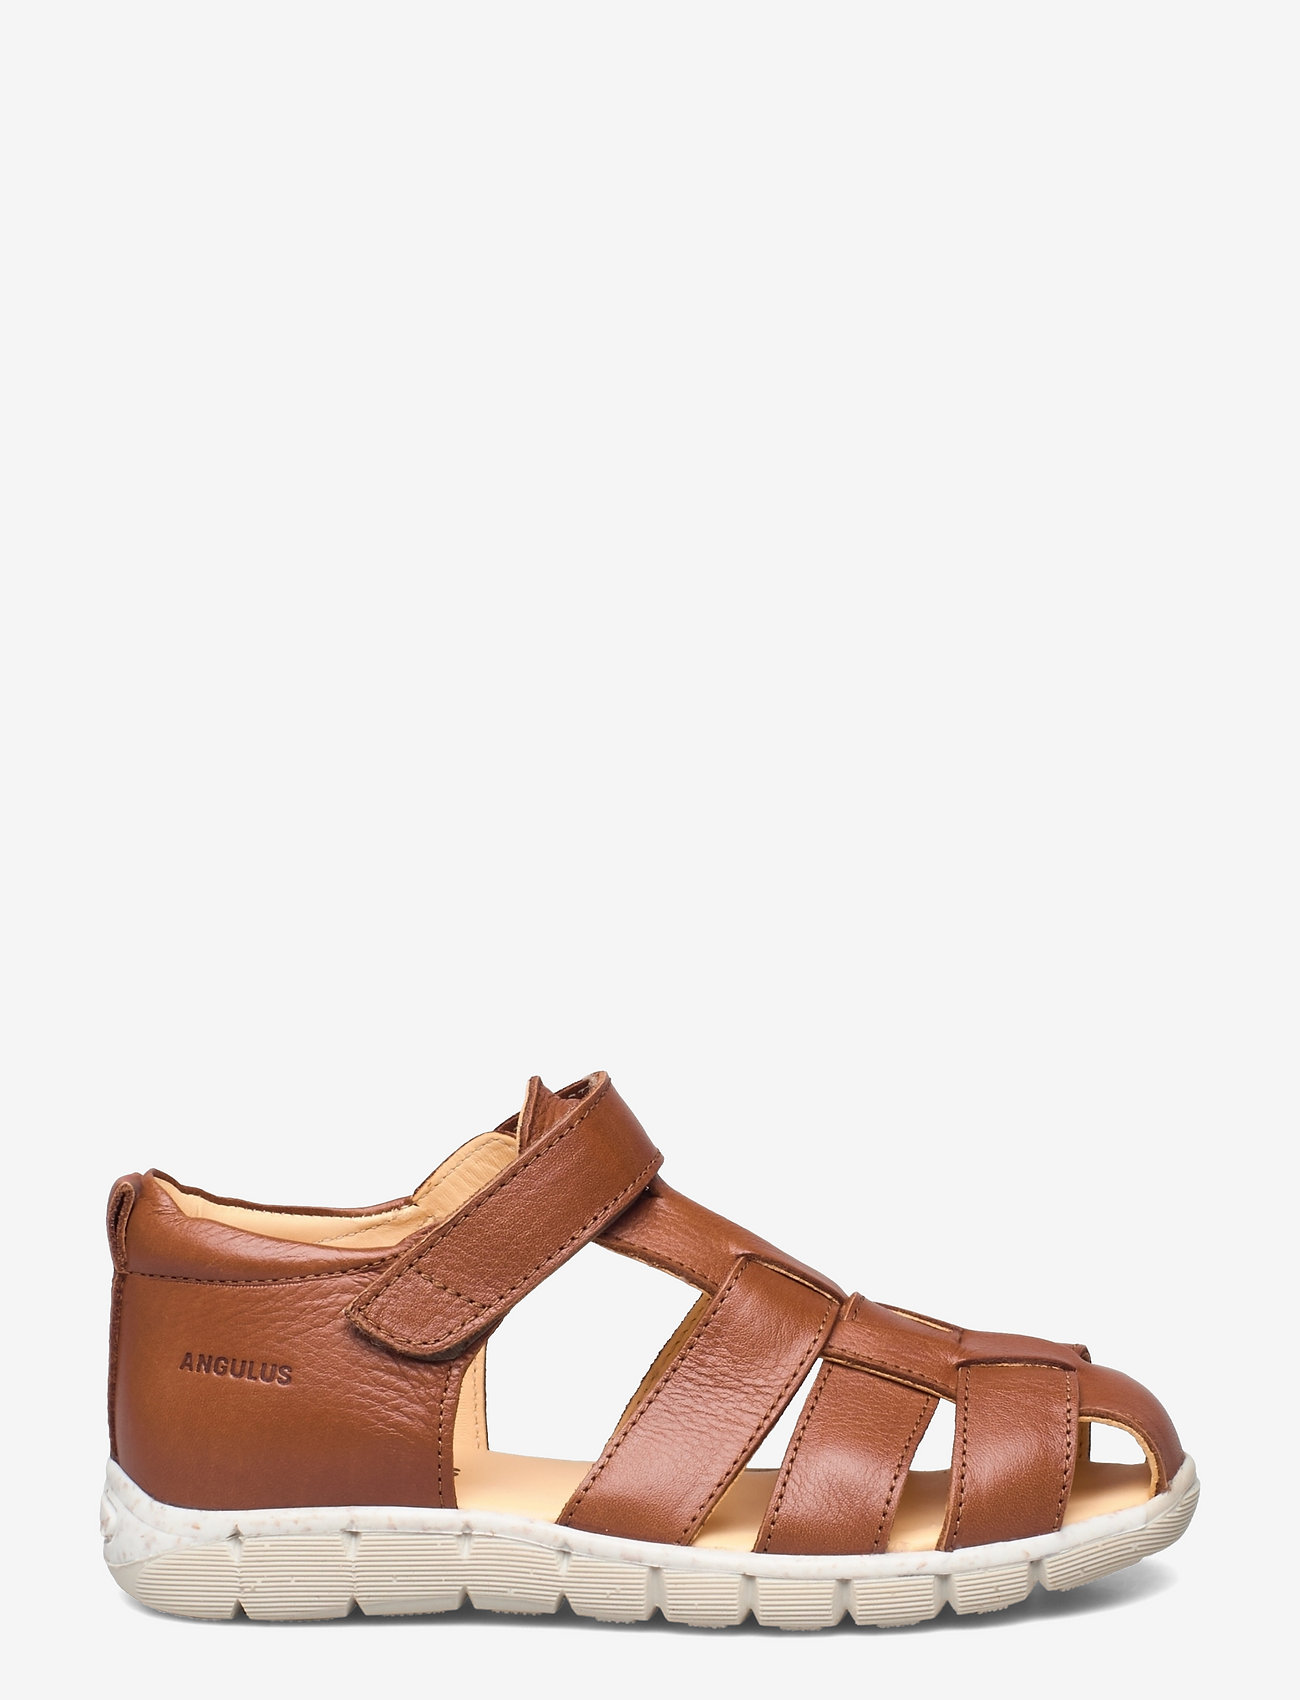 ANGULUS - Sandals - flat - closed toe -  - sandals - 1545 cognac - 1